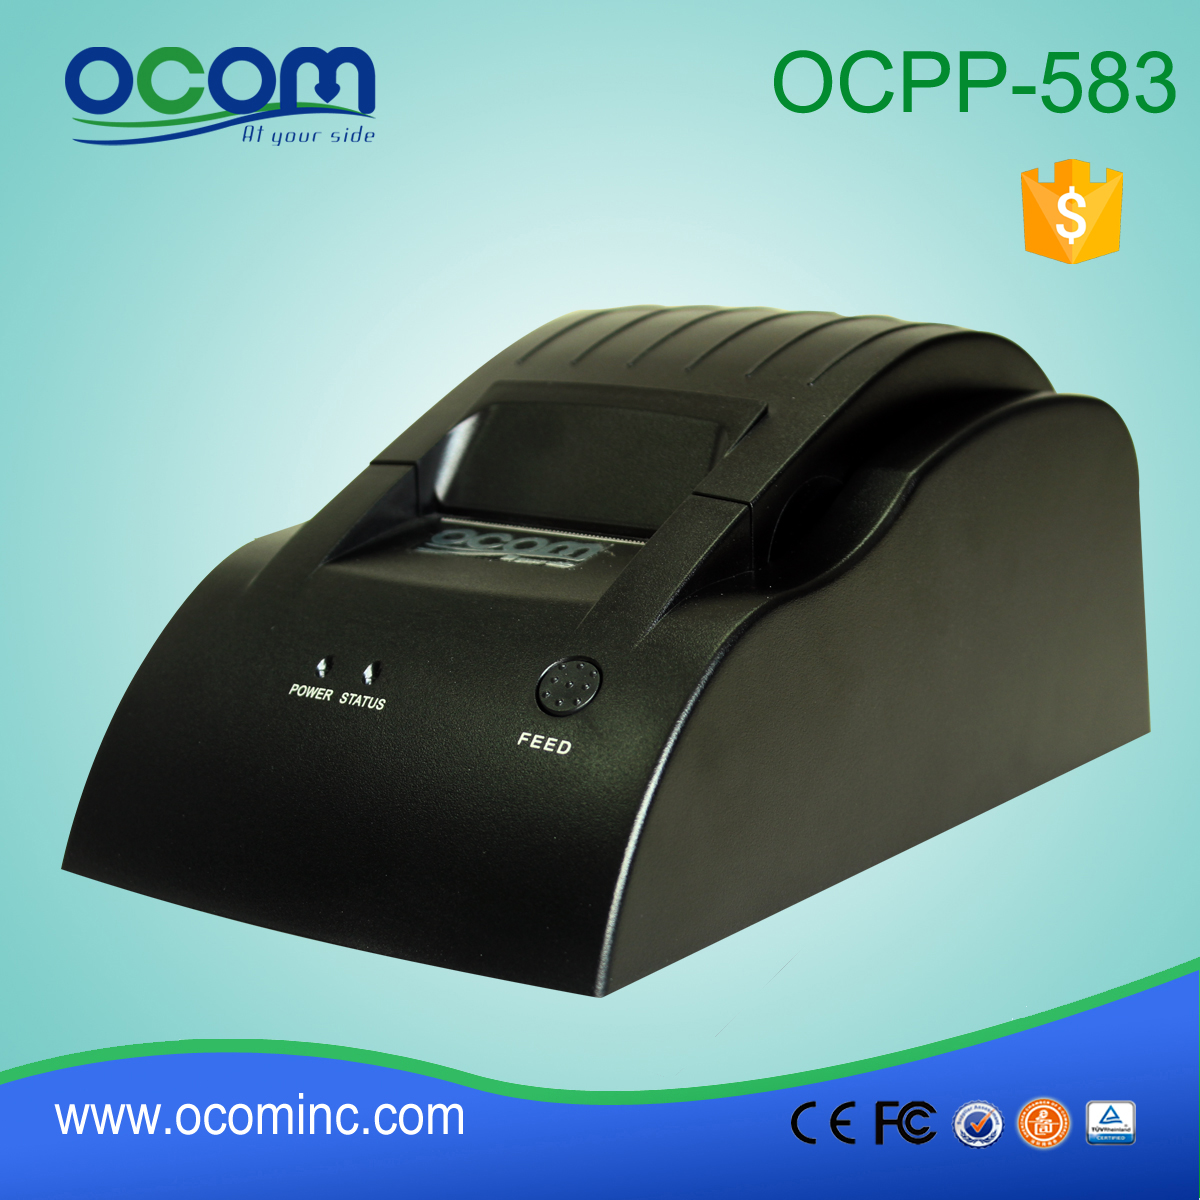 OCPP-583-P 58mm POS thermische ticketontvangstprinter 36p parallelle poort